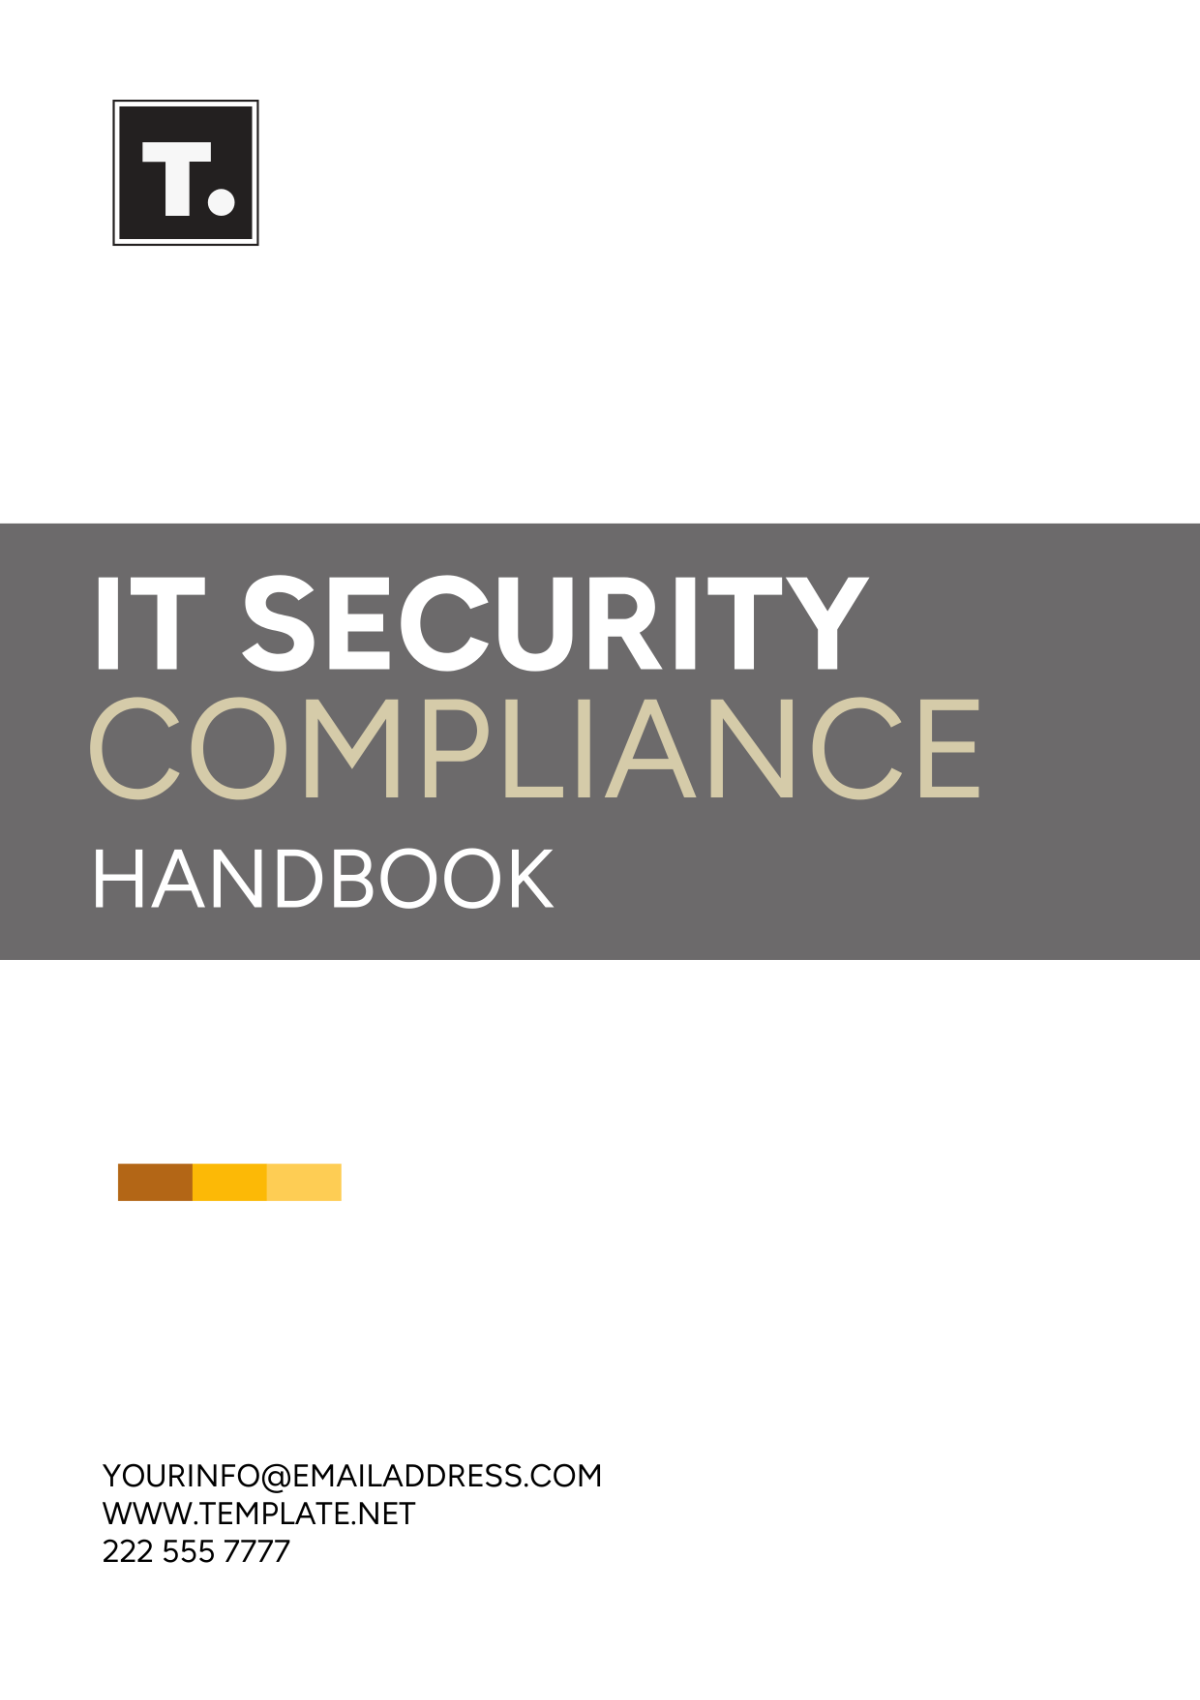 Free IT Security Compliance Handbook Template